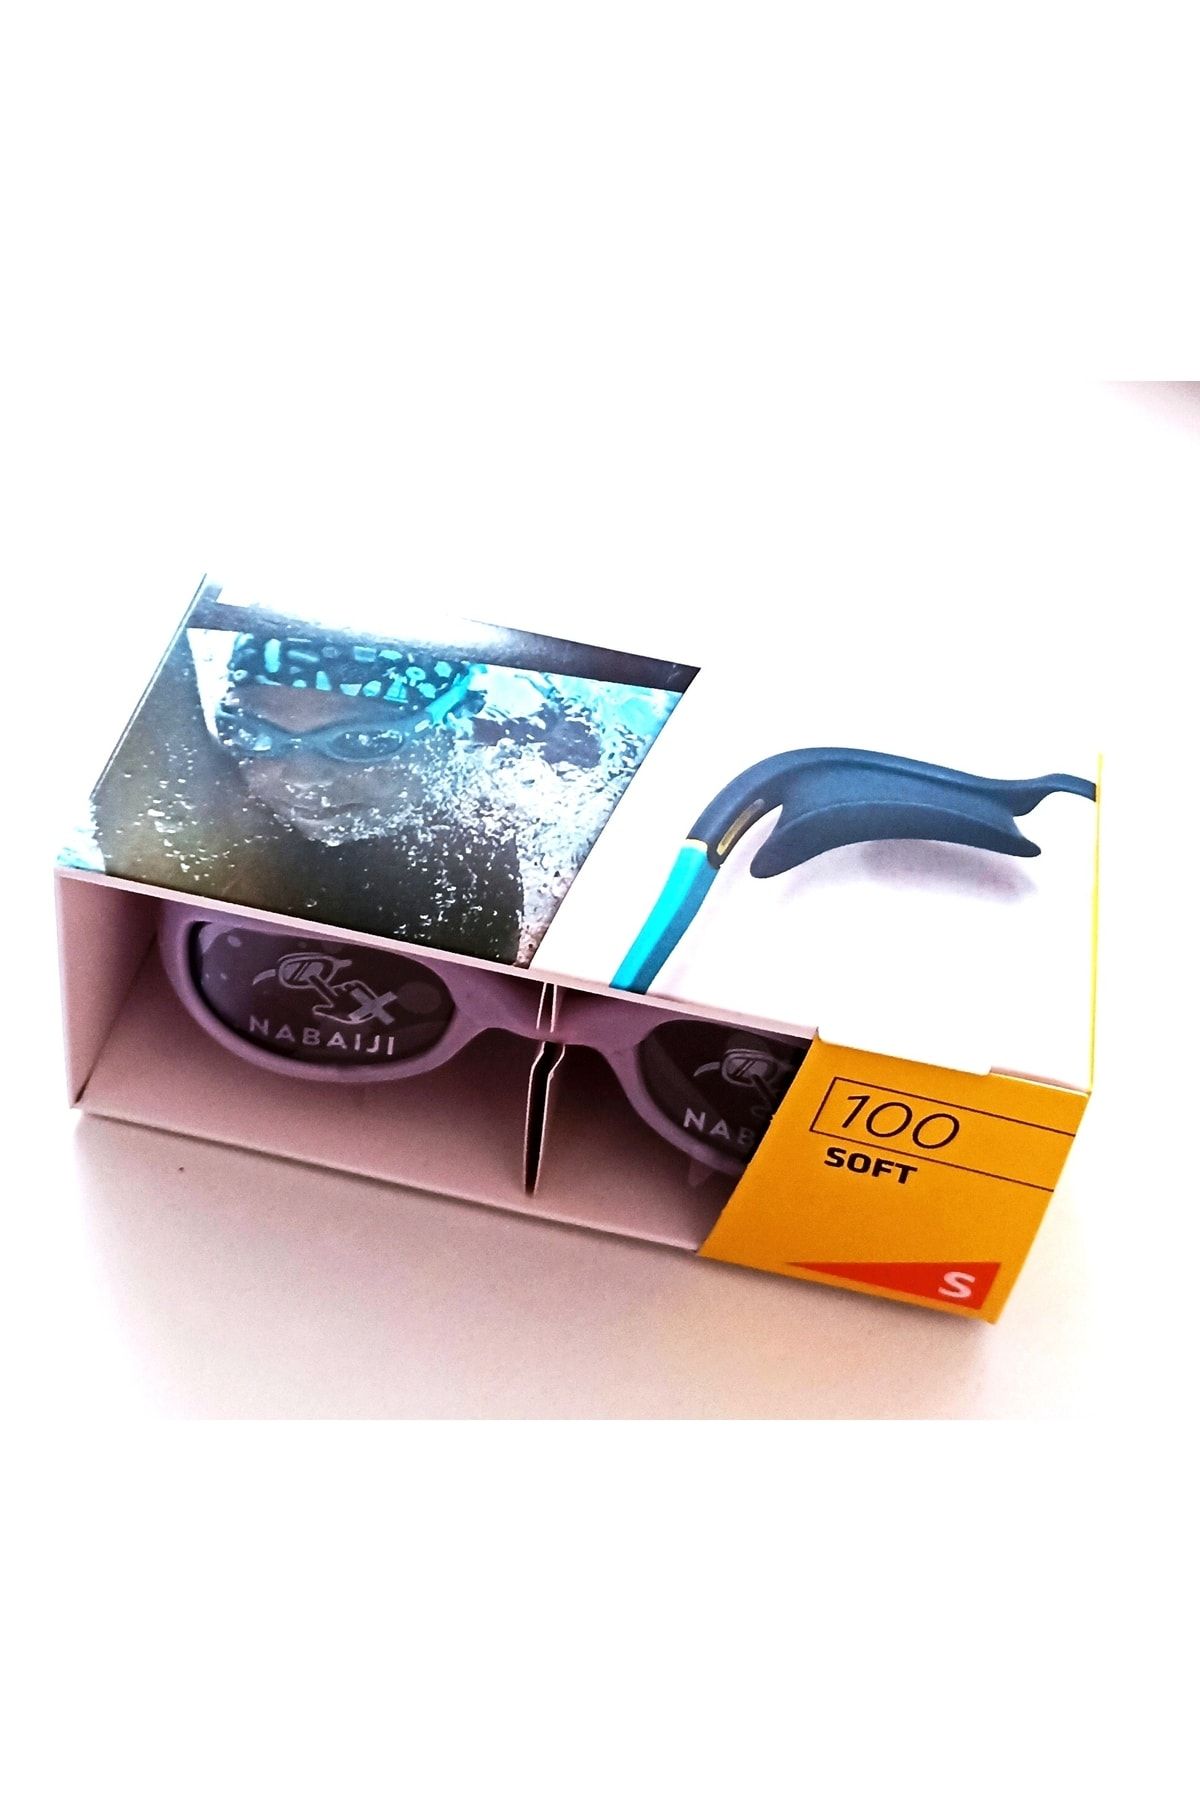 Decathlon Nabaiji Yüzücü Gözlüğü - S Boy - Pembe Leylak - 100 Soft